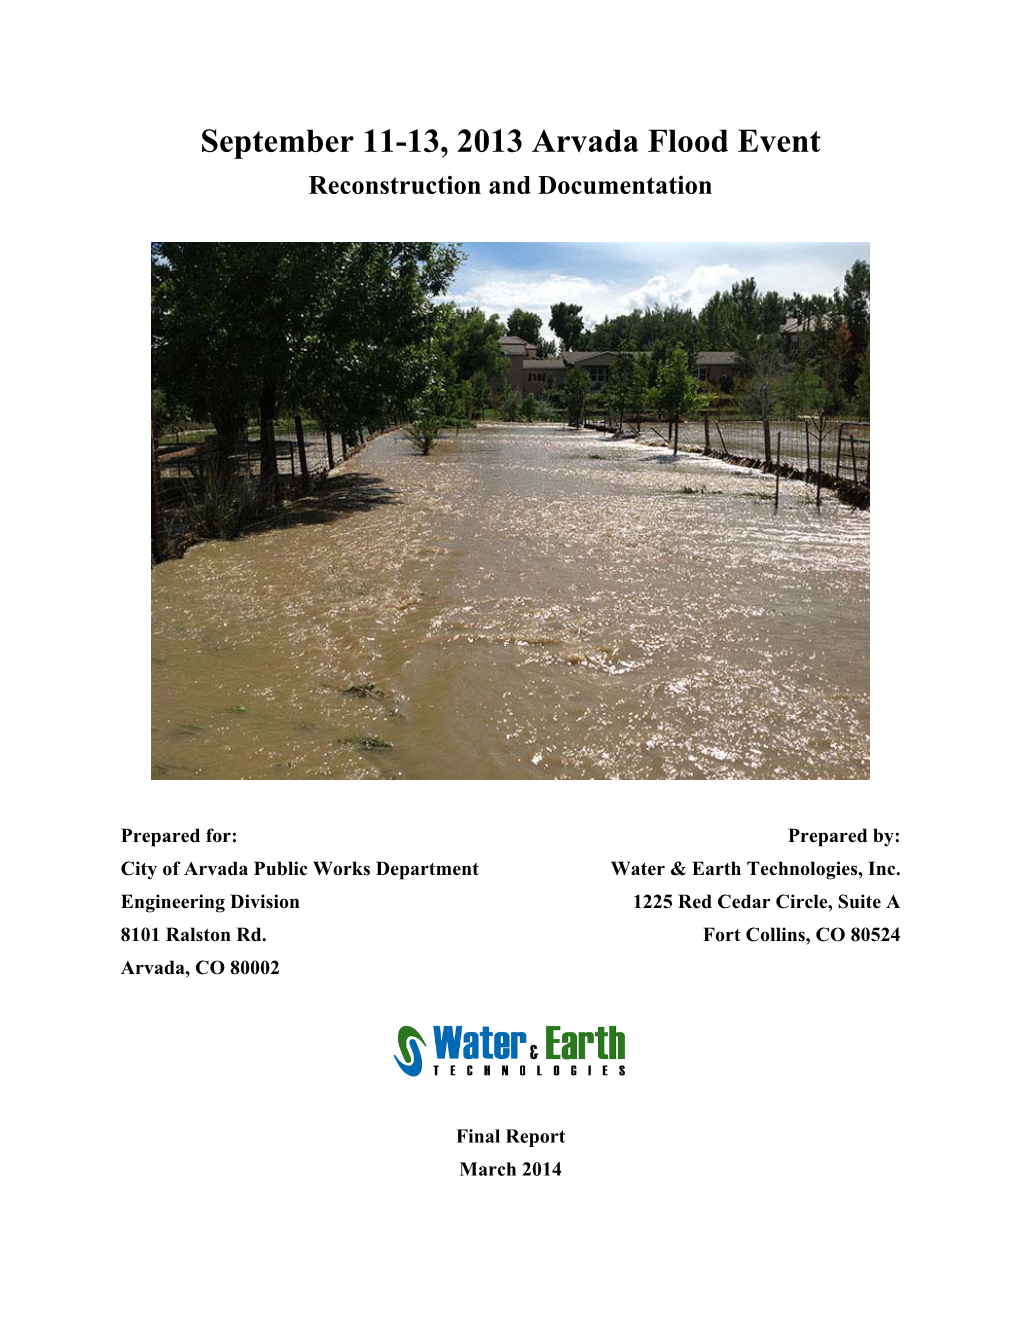 September 11-13, 2013 Arvada Flood Event Reconstruction and Documentation